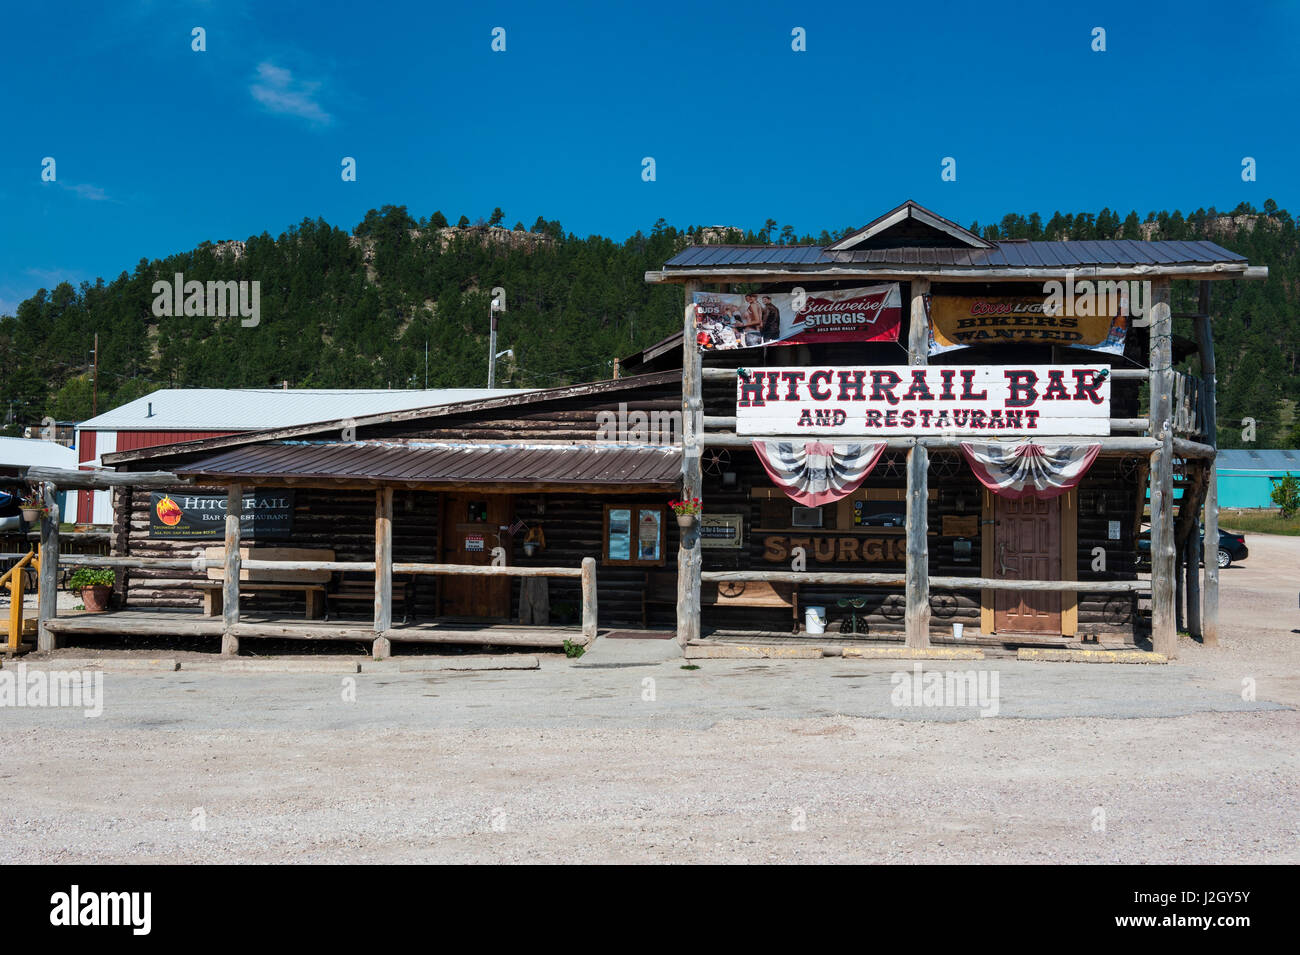 Wild western bar, Black hills, South Dakota, USA Stock Photo